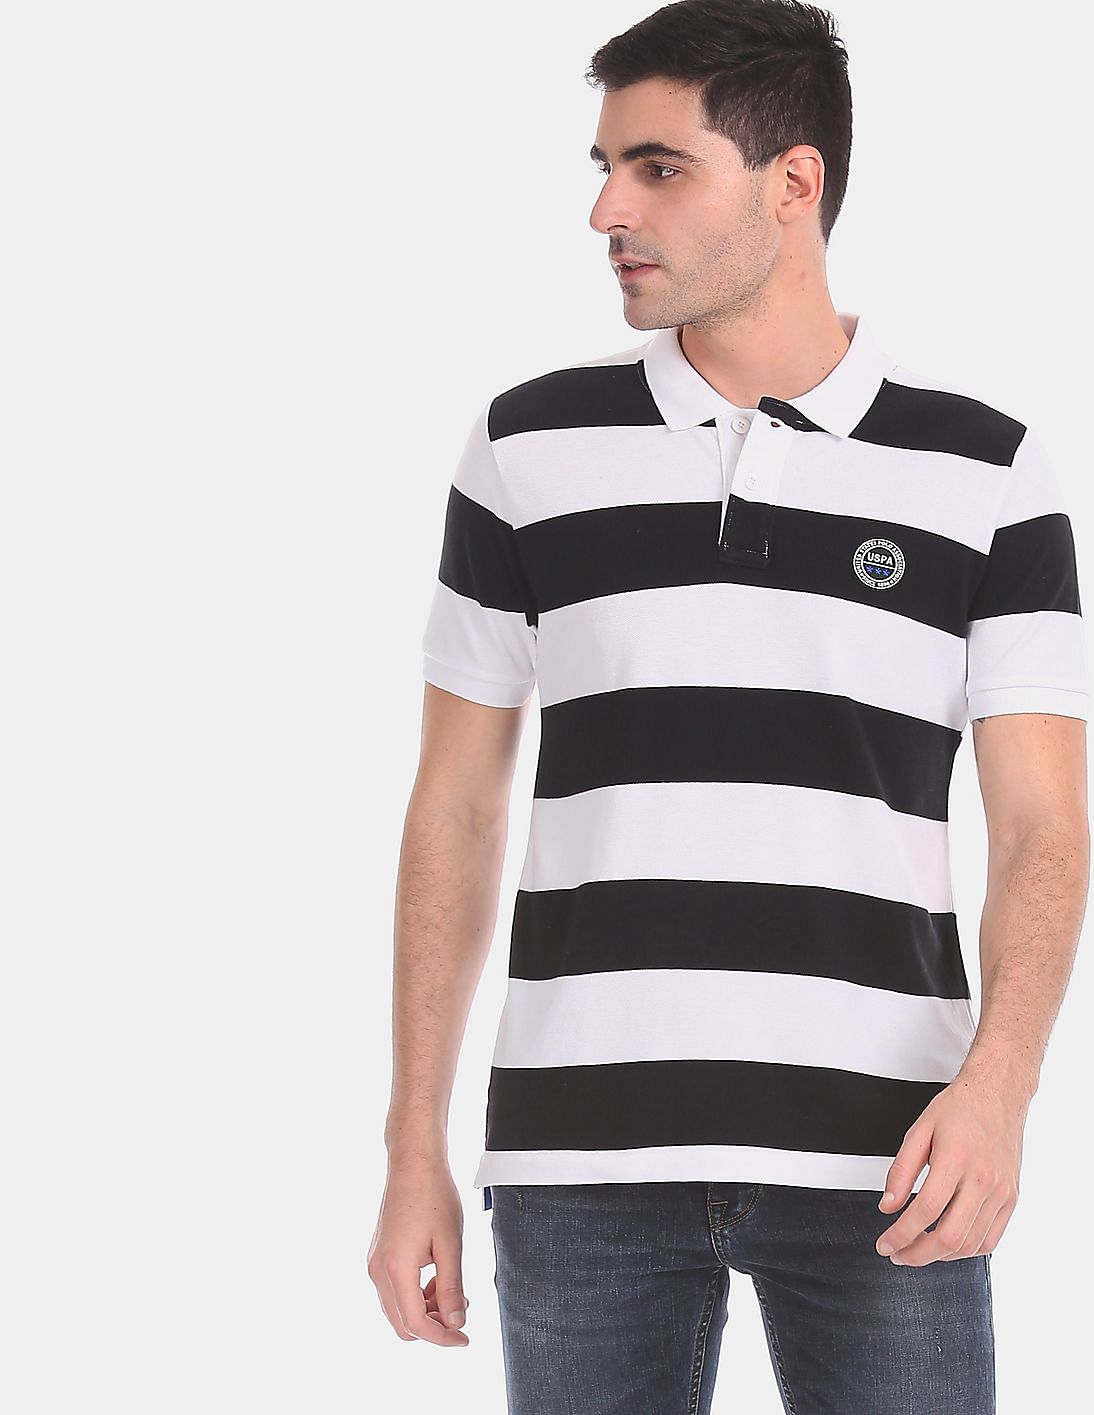 polo black and white striped shirt